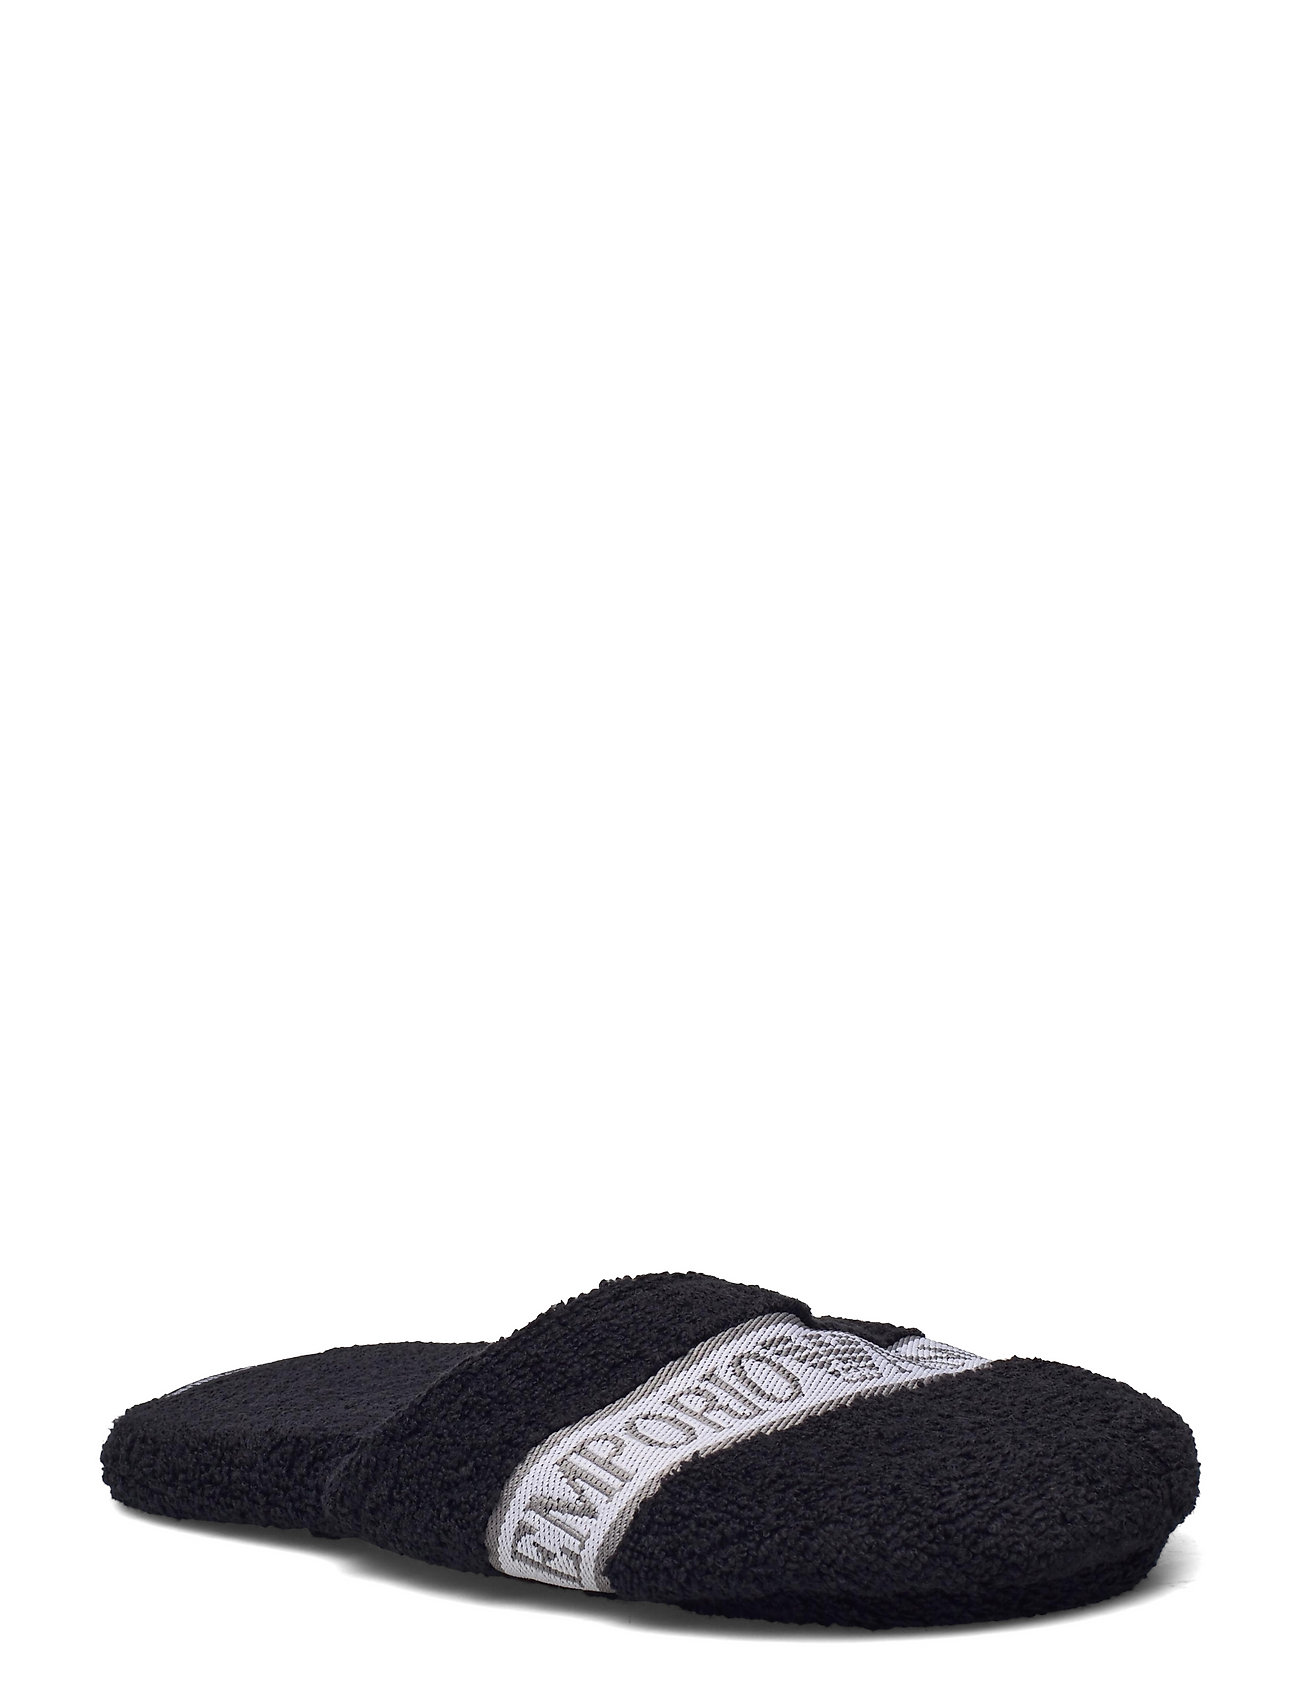 Emporio Armani Men's Woven Slippers - Slippers 